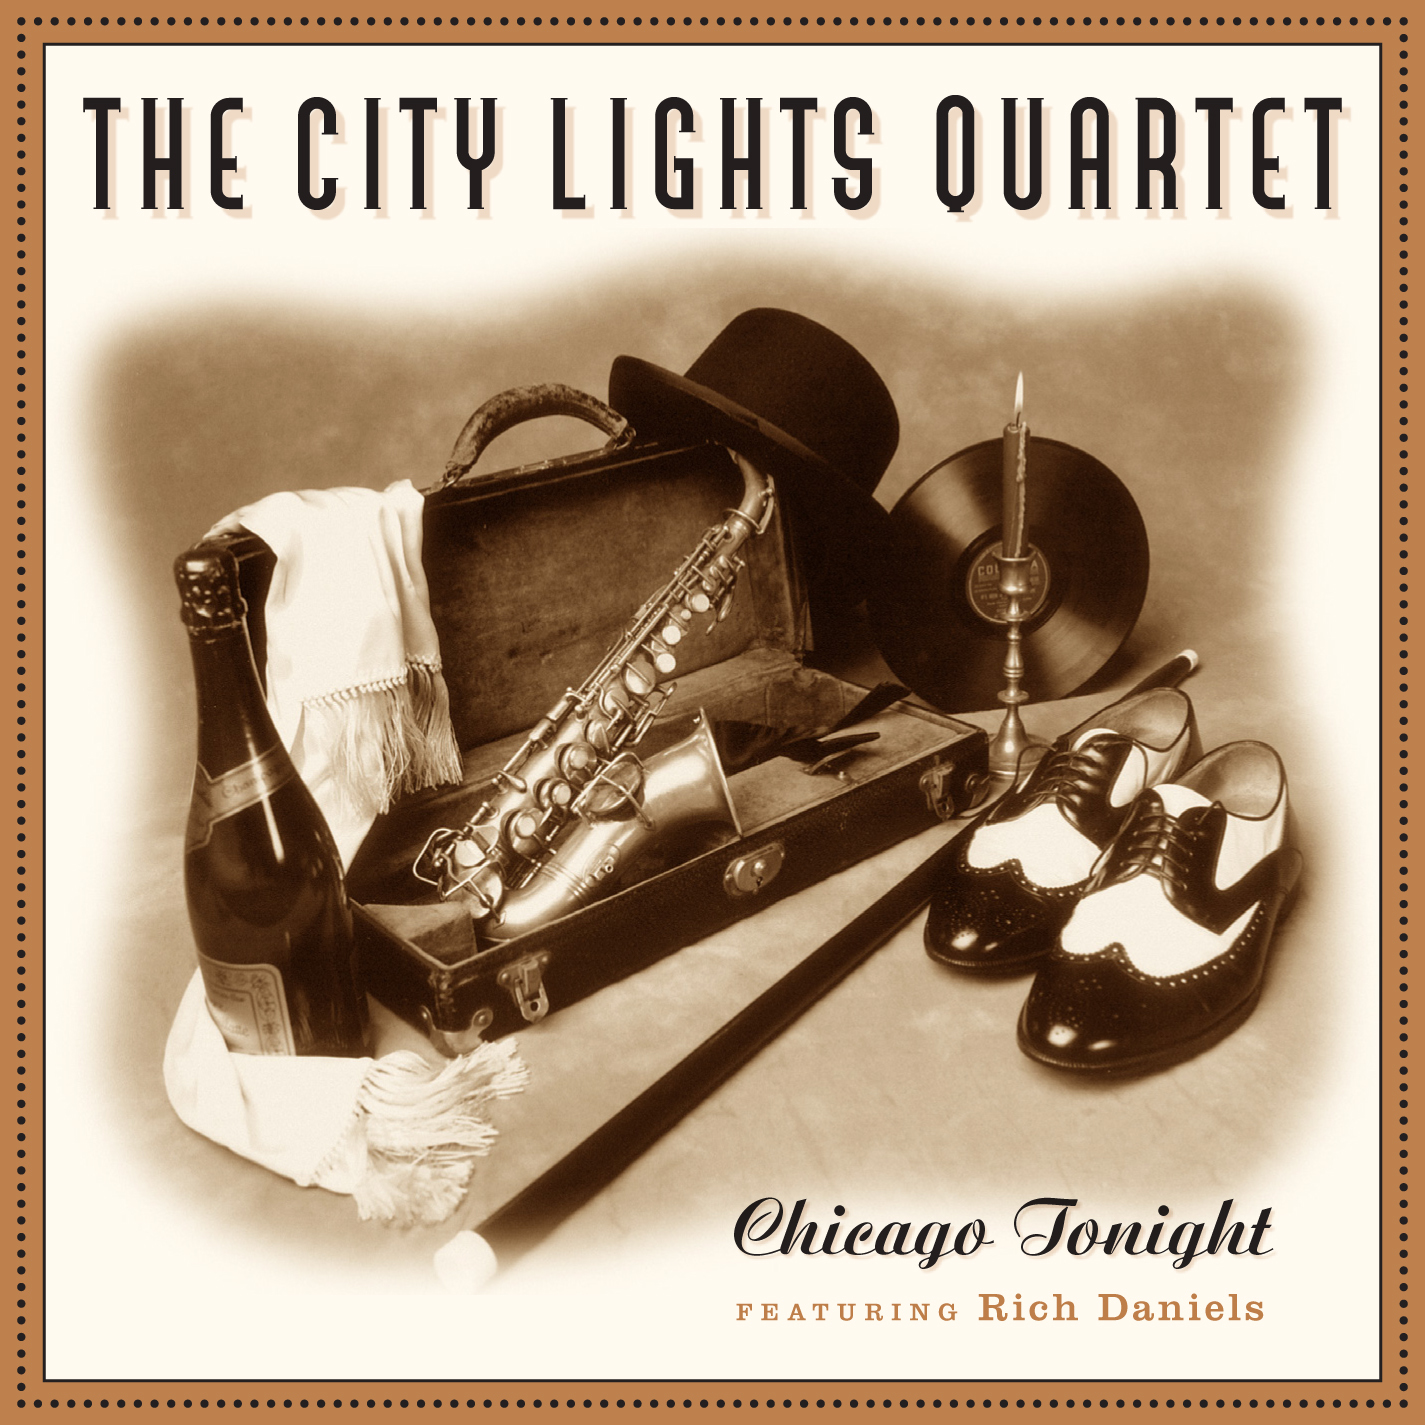 he City Lights Quartet - Chicago Tonight